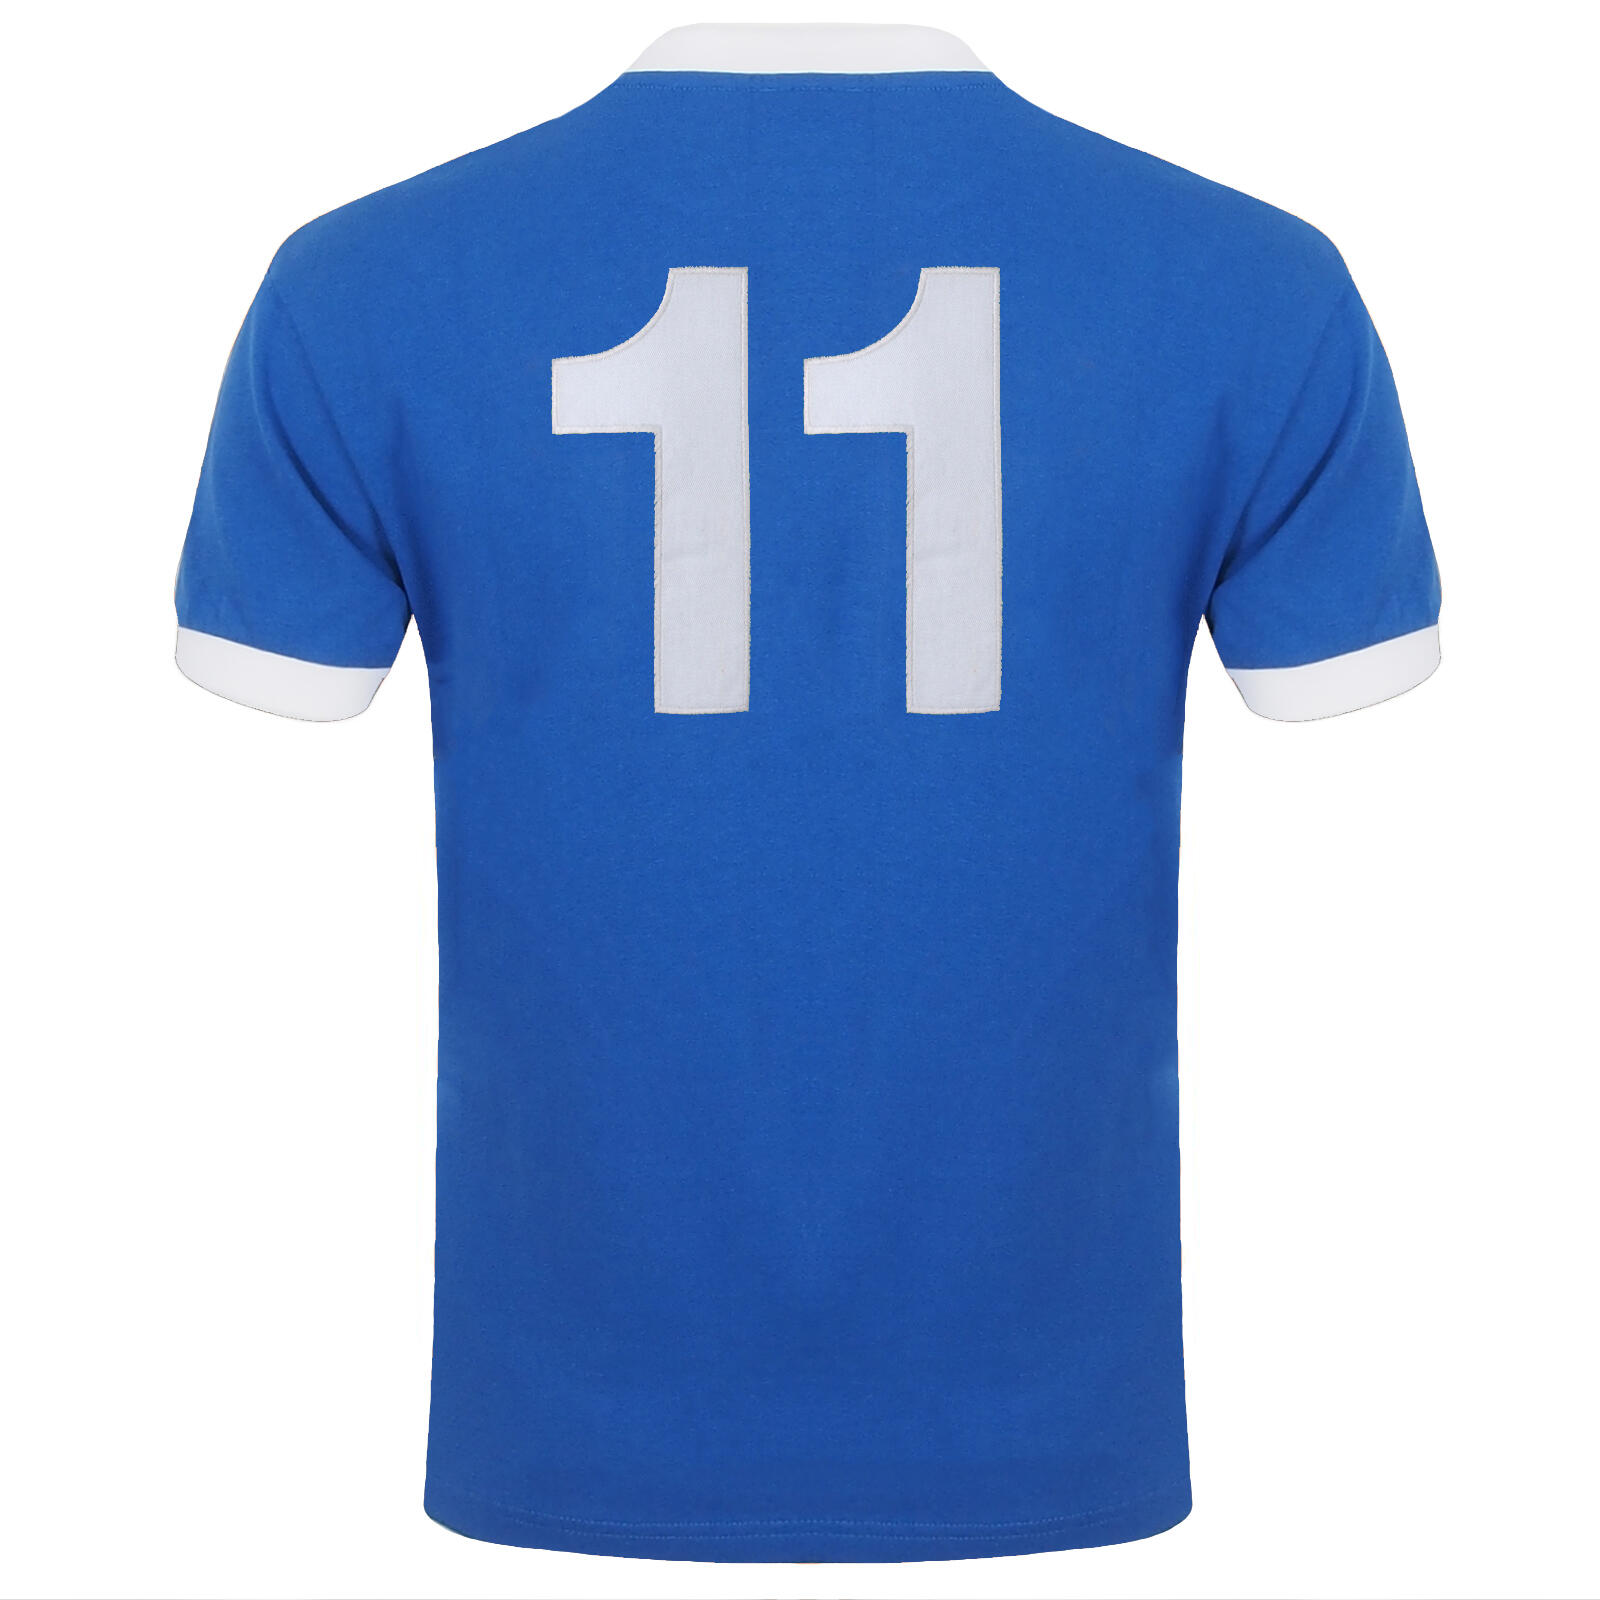 Northern Ireland Official Gift Mens Retro Football Kit Shirt George Best 11 GAWA 2/3